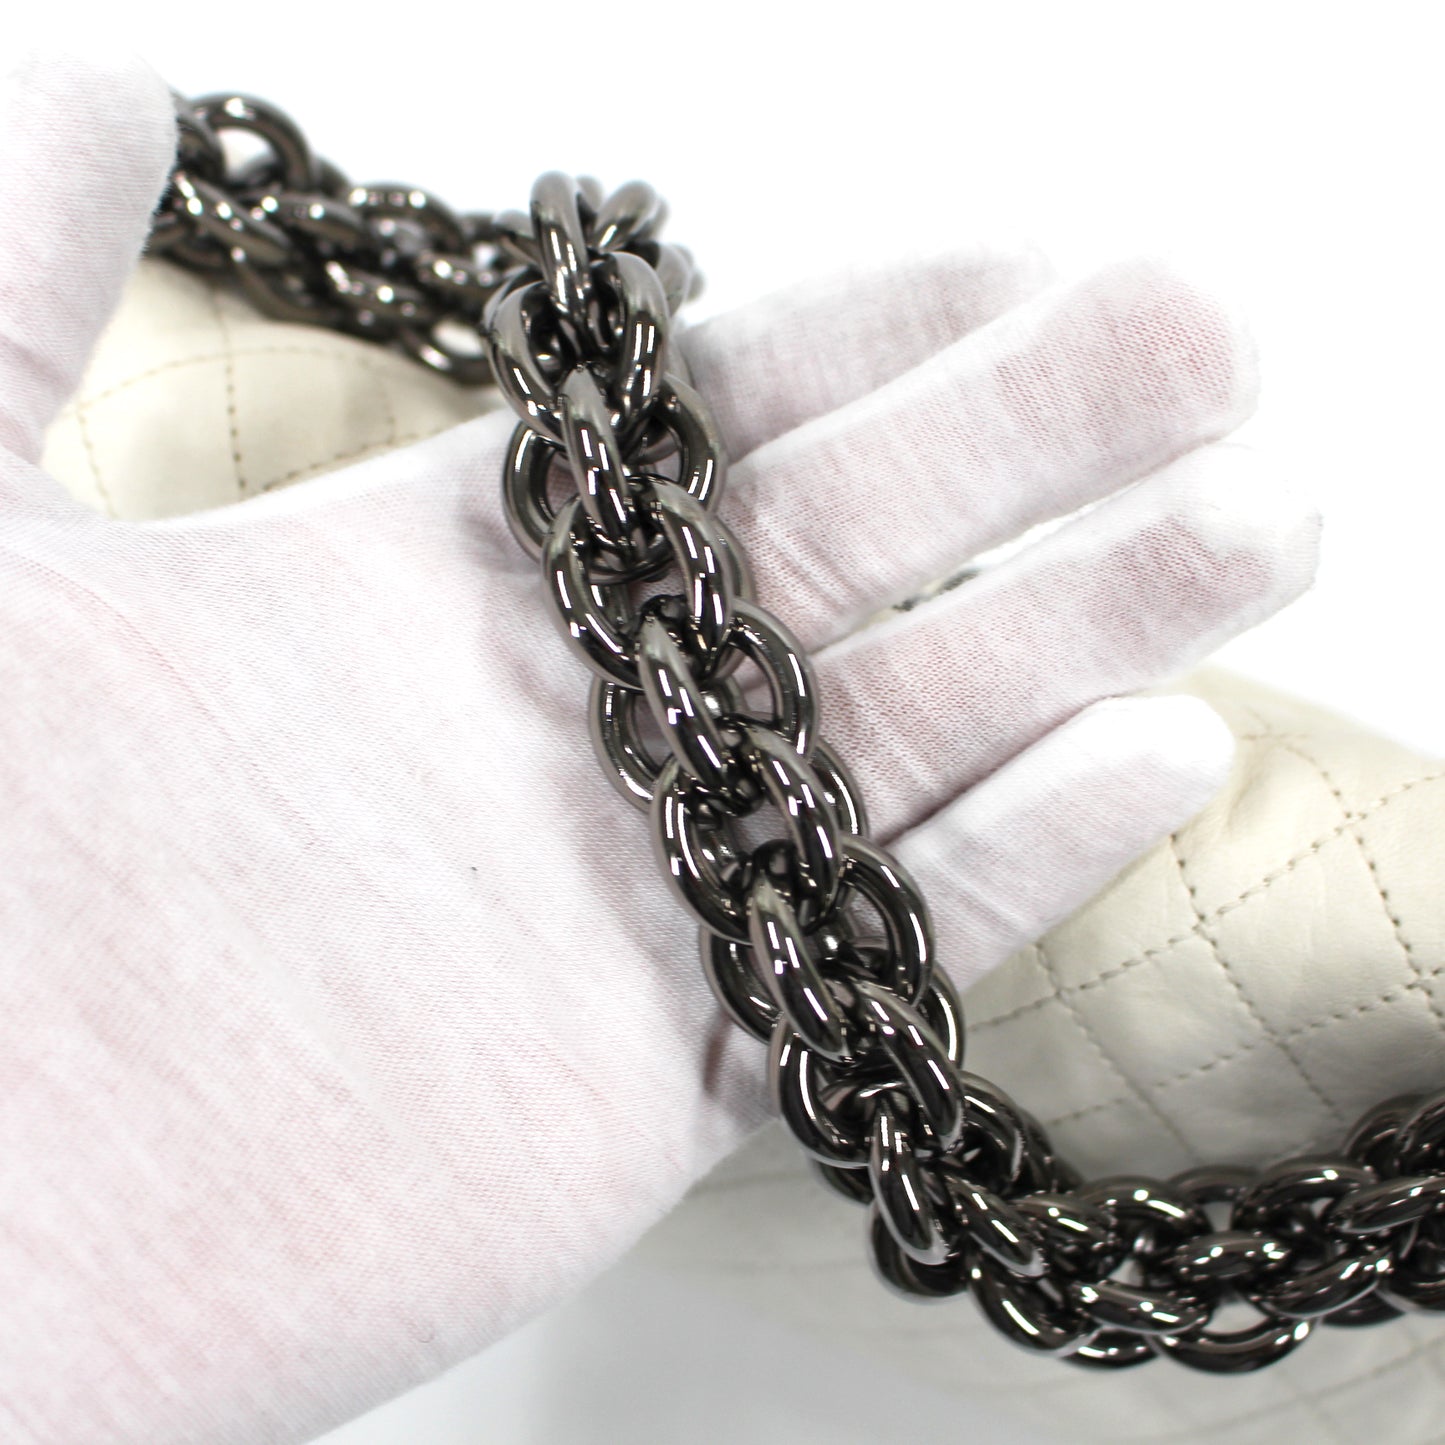 Chanel Leather Chunky Chain Flap Handbag